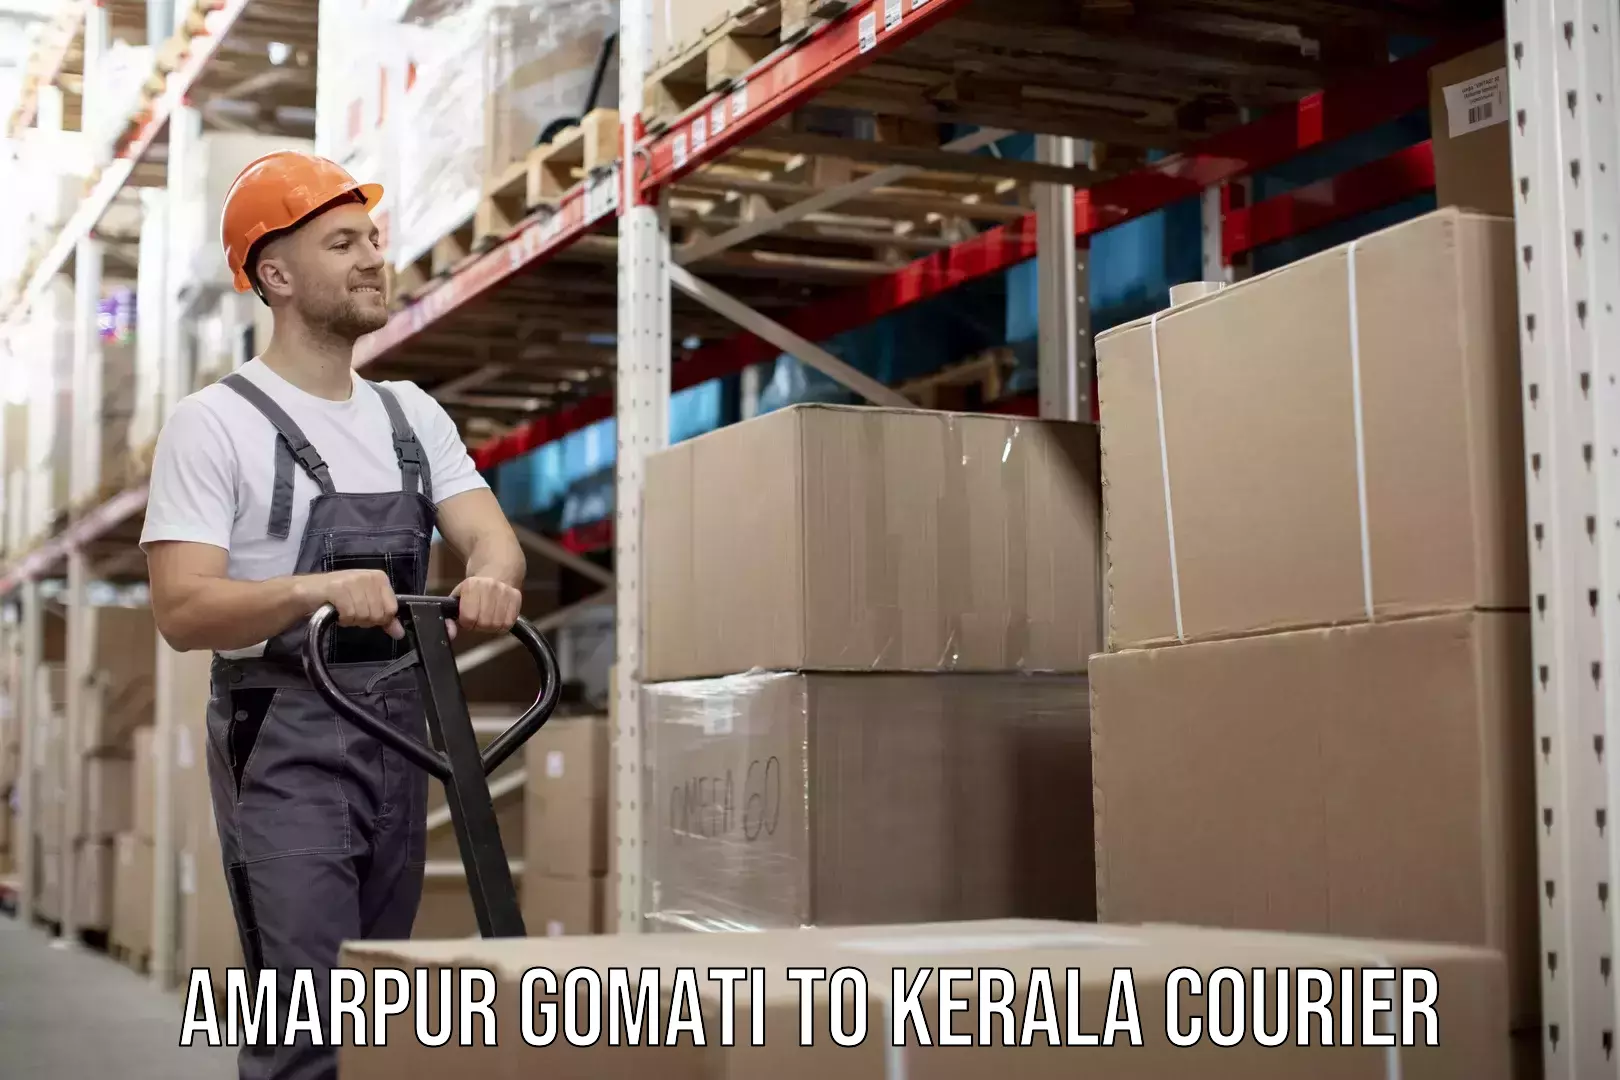 Parcel handling and care Amarpur Gomati to Kerala